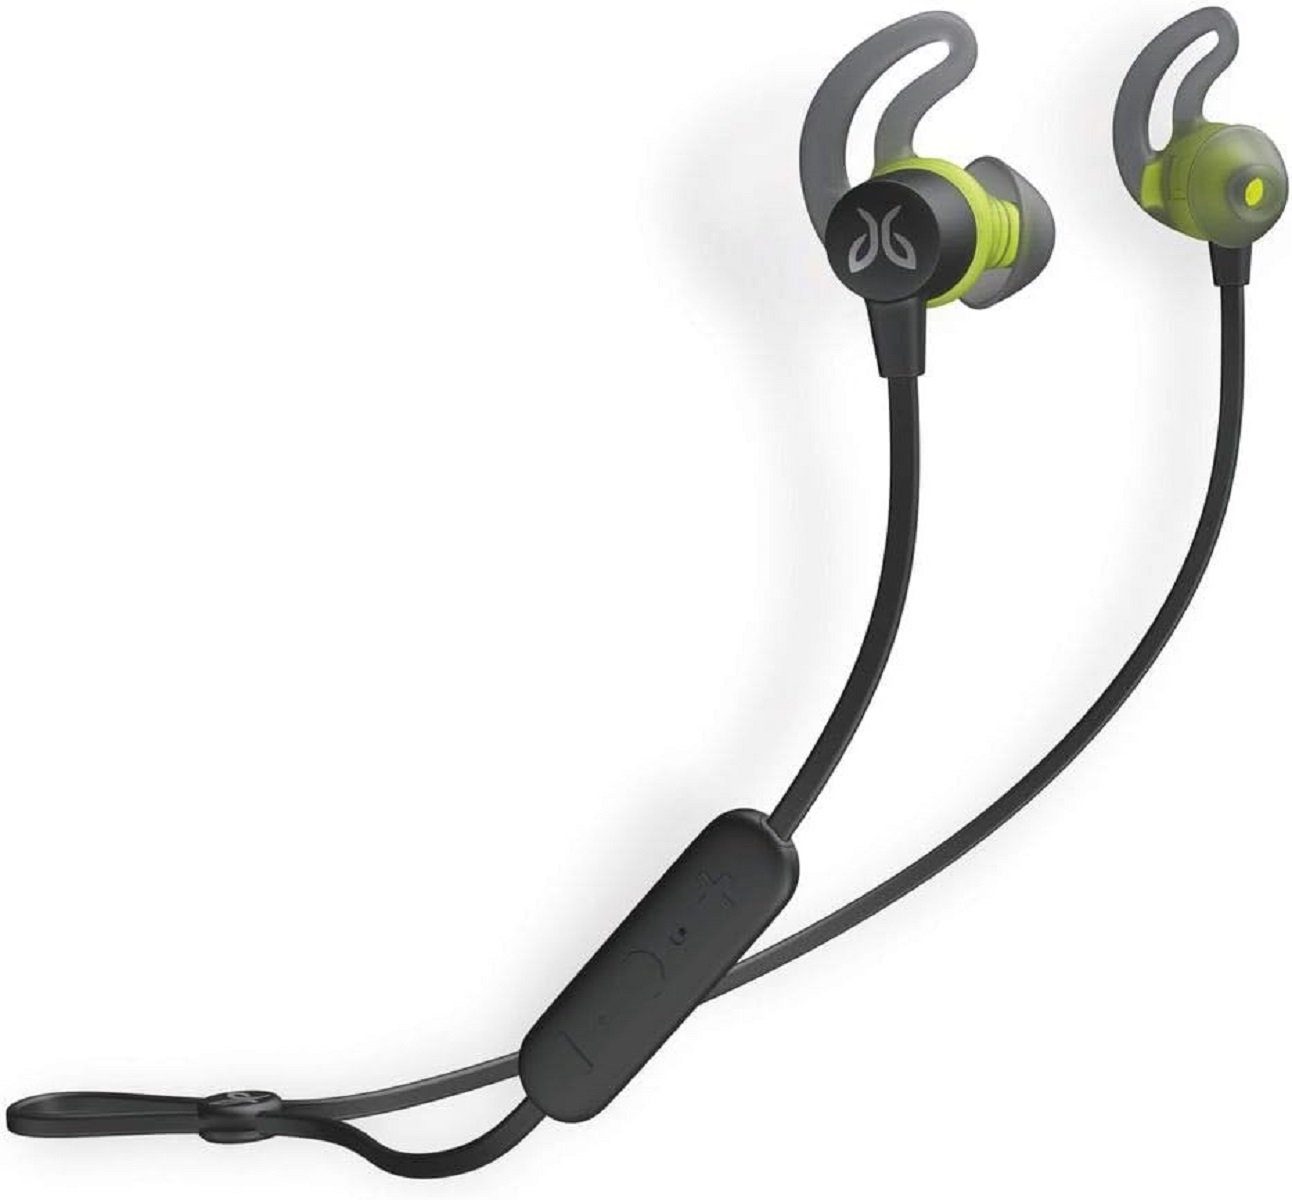 Schweißbeständig Bluetooth, In-Ear Sport-Kopfhörer Jaybird Wireless Tarah Kopfhörer,